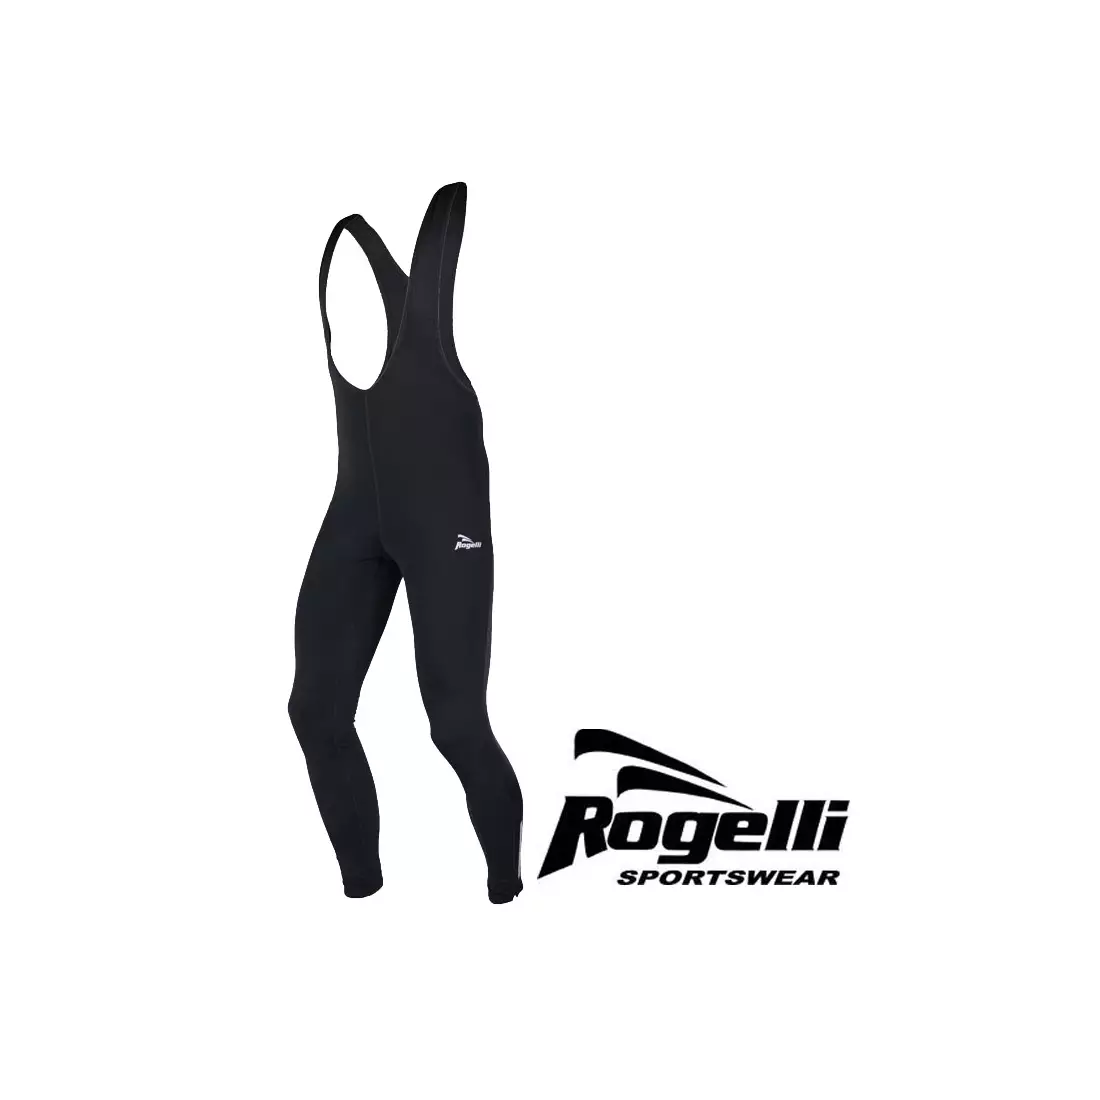 ROGELLI PERANO - Warme Sporthose mit Träger